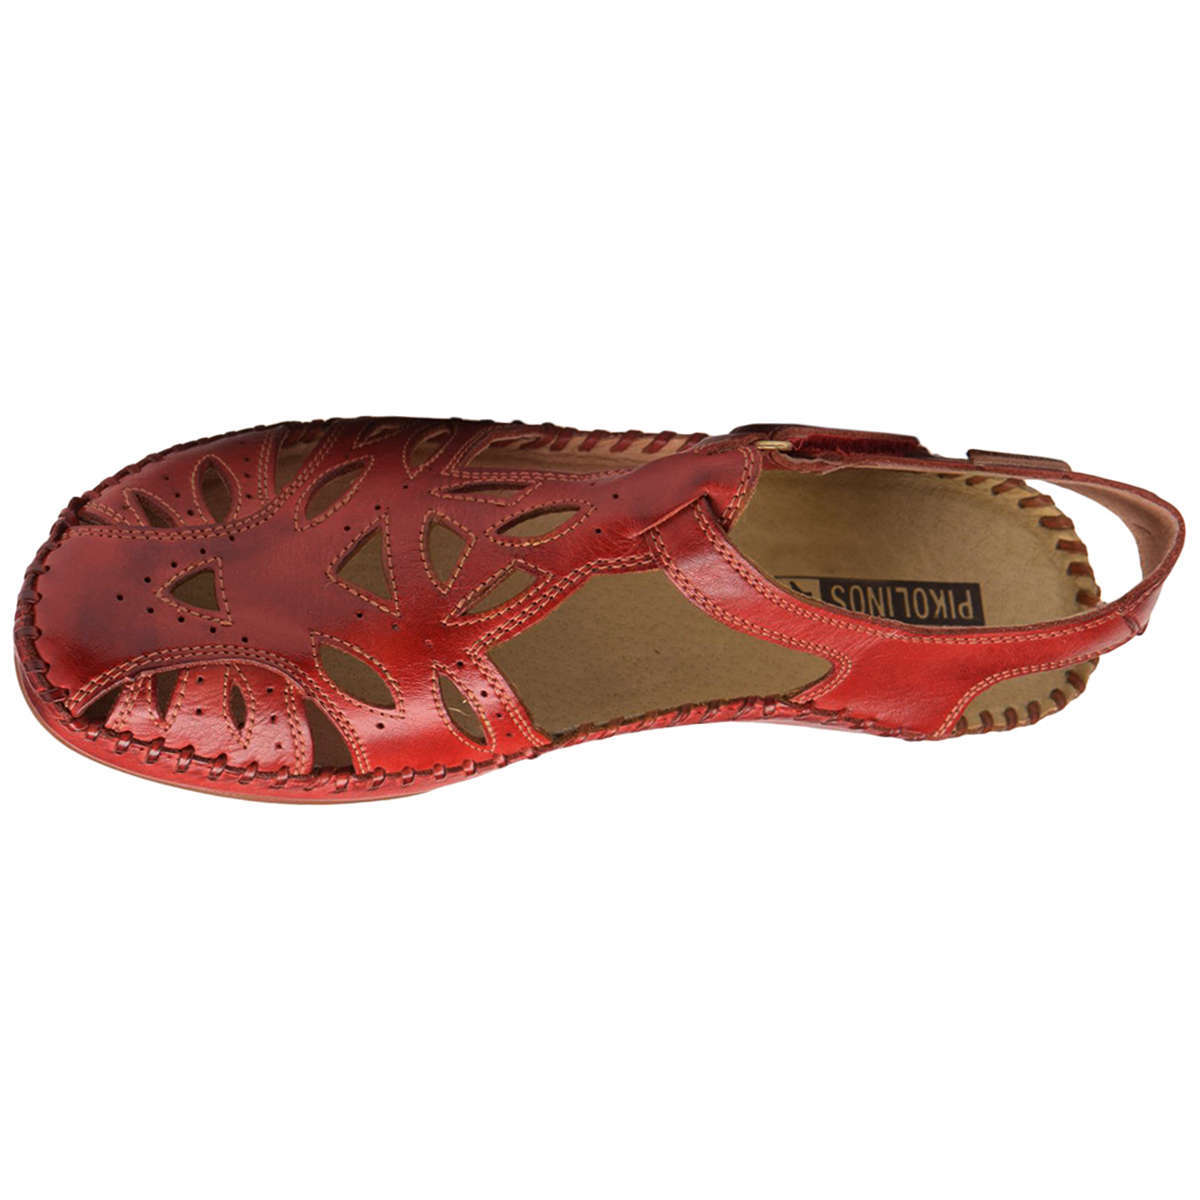 Pikolinos Puerto Vallarta 655-8312 Leather Womens Sandals#color_coral